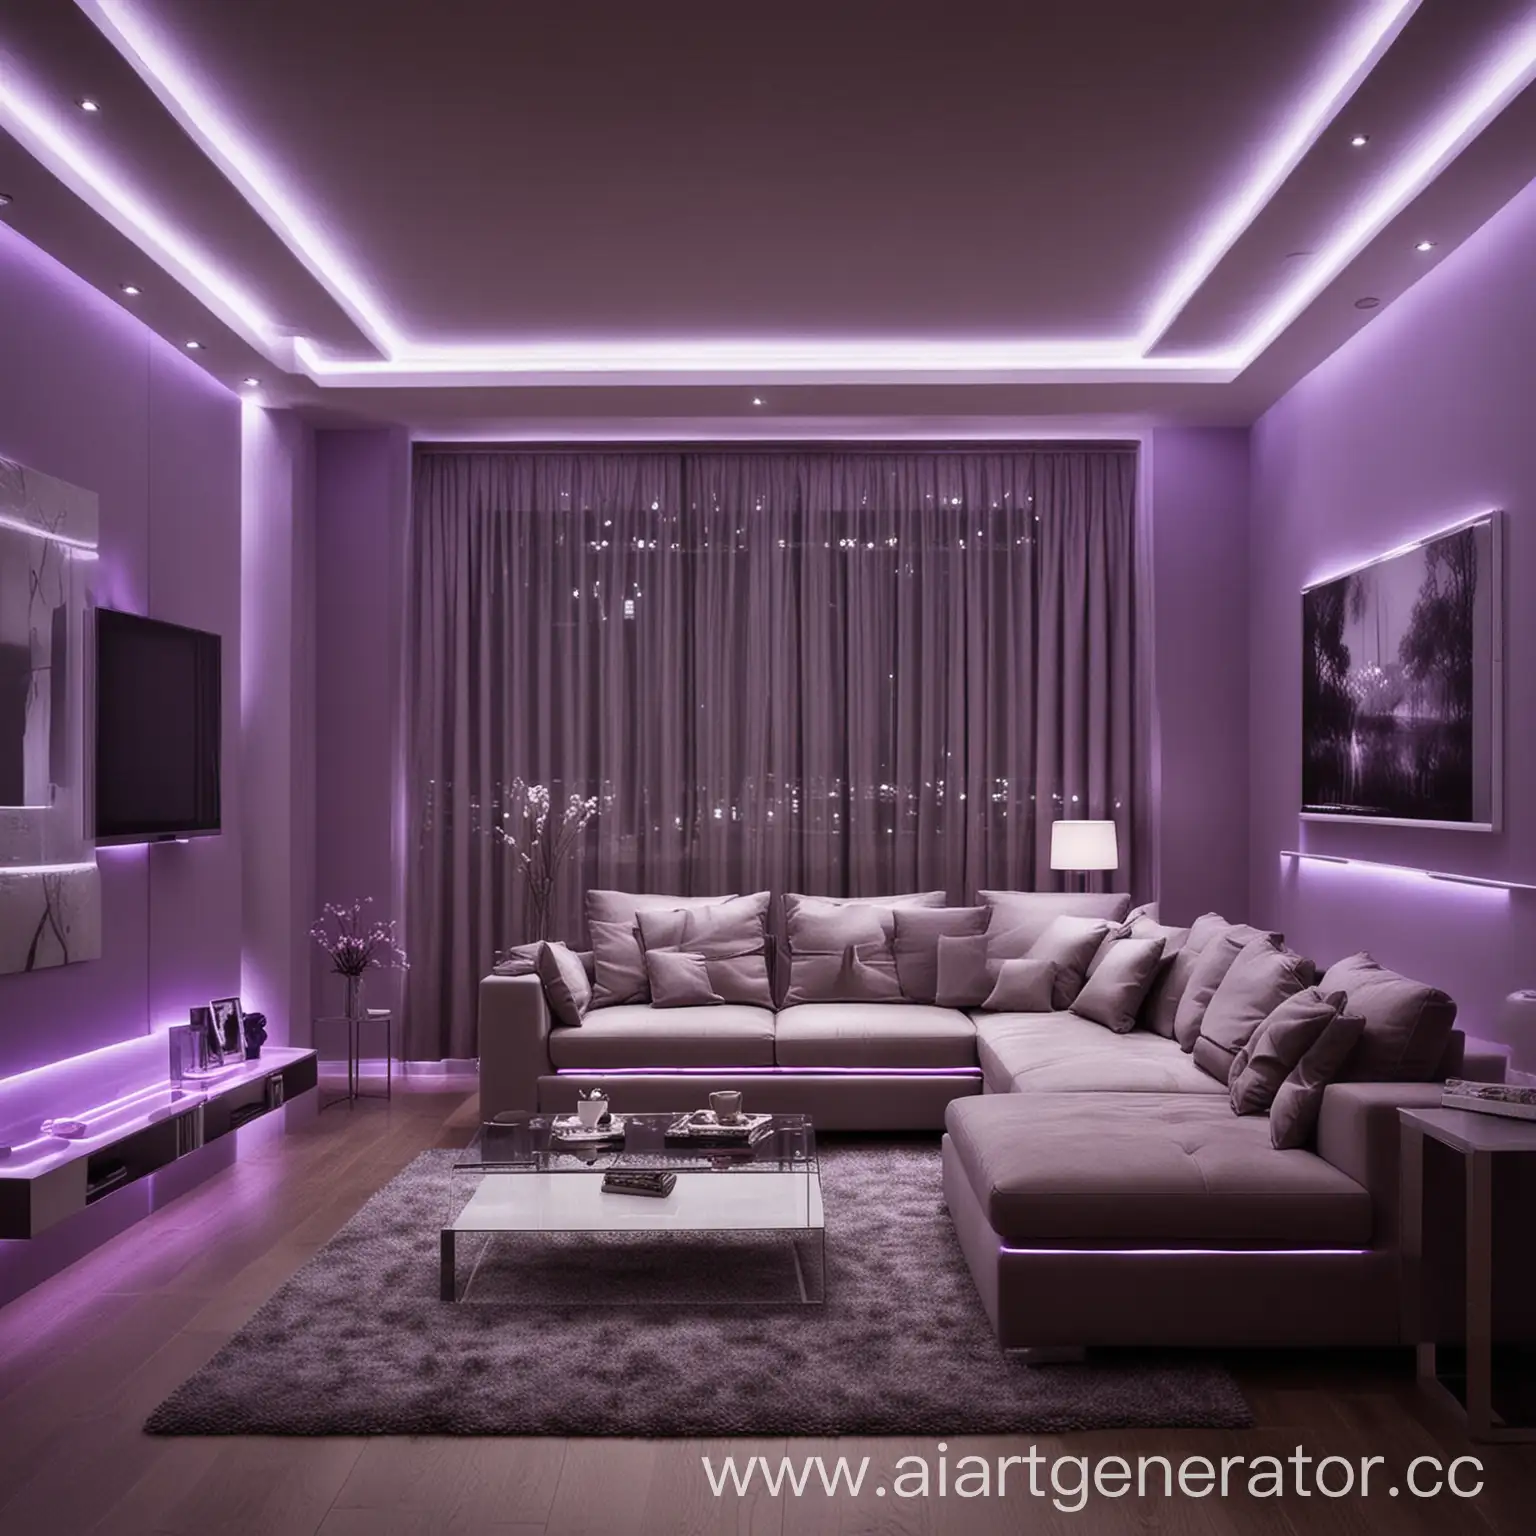 Interior-Design-with-LED-Strip-Lights-in-Dark-Bluish-Purple-Tones